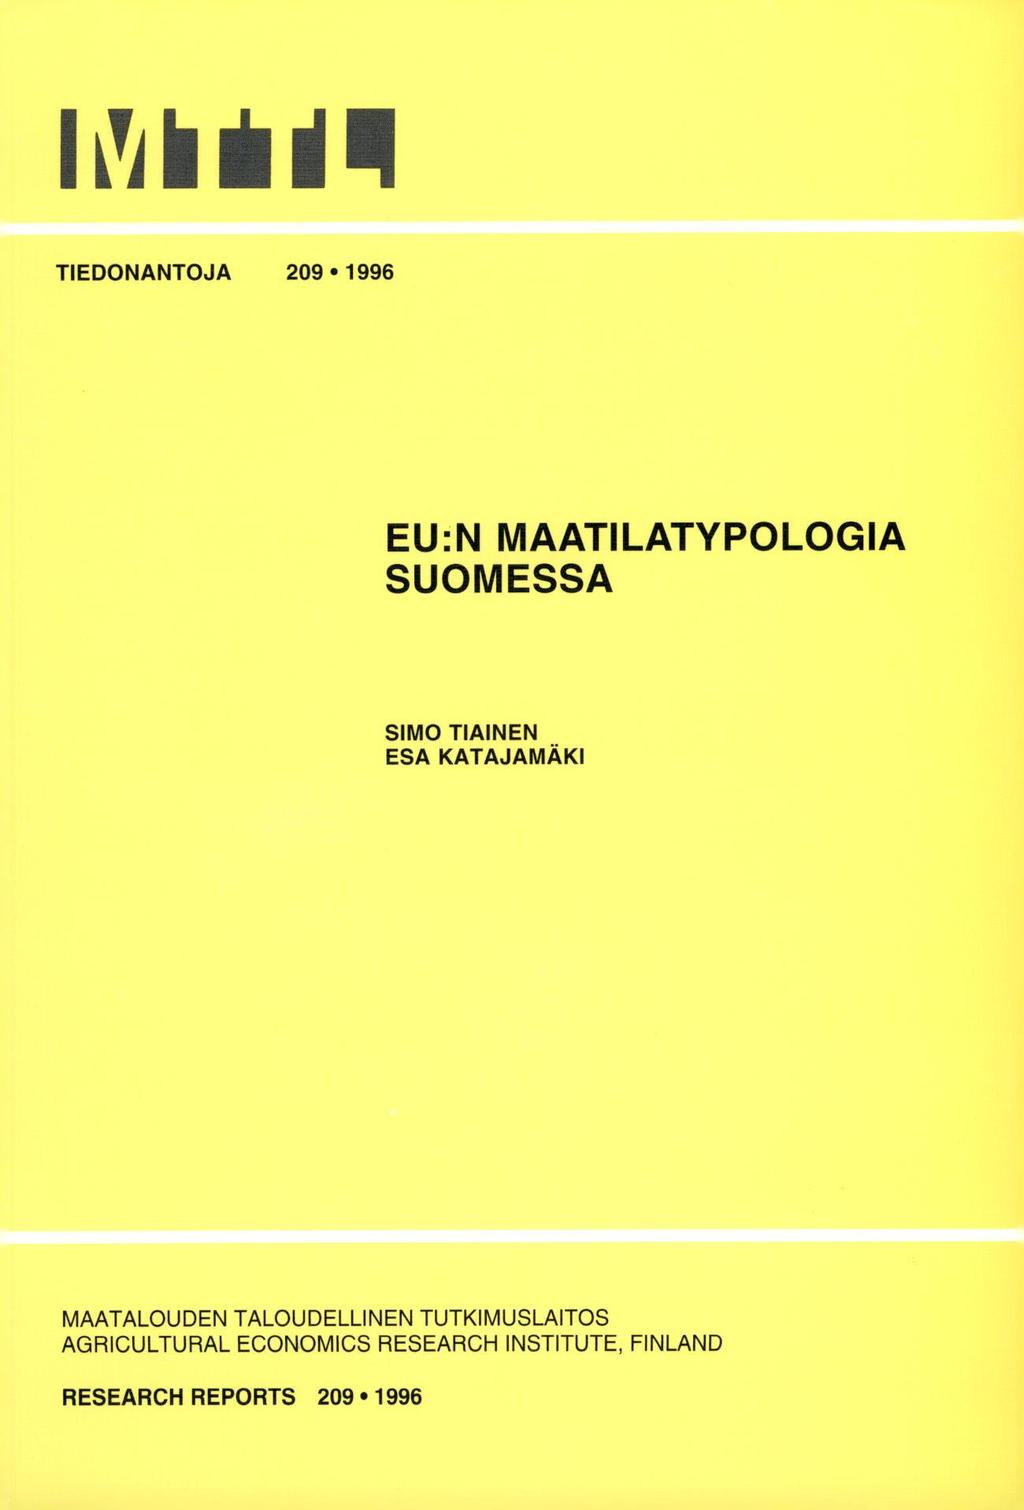 TIEDONANTOJA 209 1996 EU:N MAATILATYPOLOGIA SUOMESSA SIMO TIAINEN ESA KATAJAMÄKI MAATALOUDEN